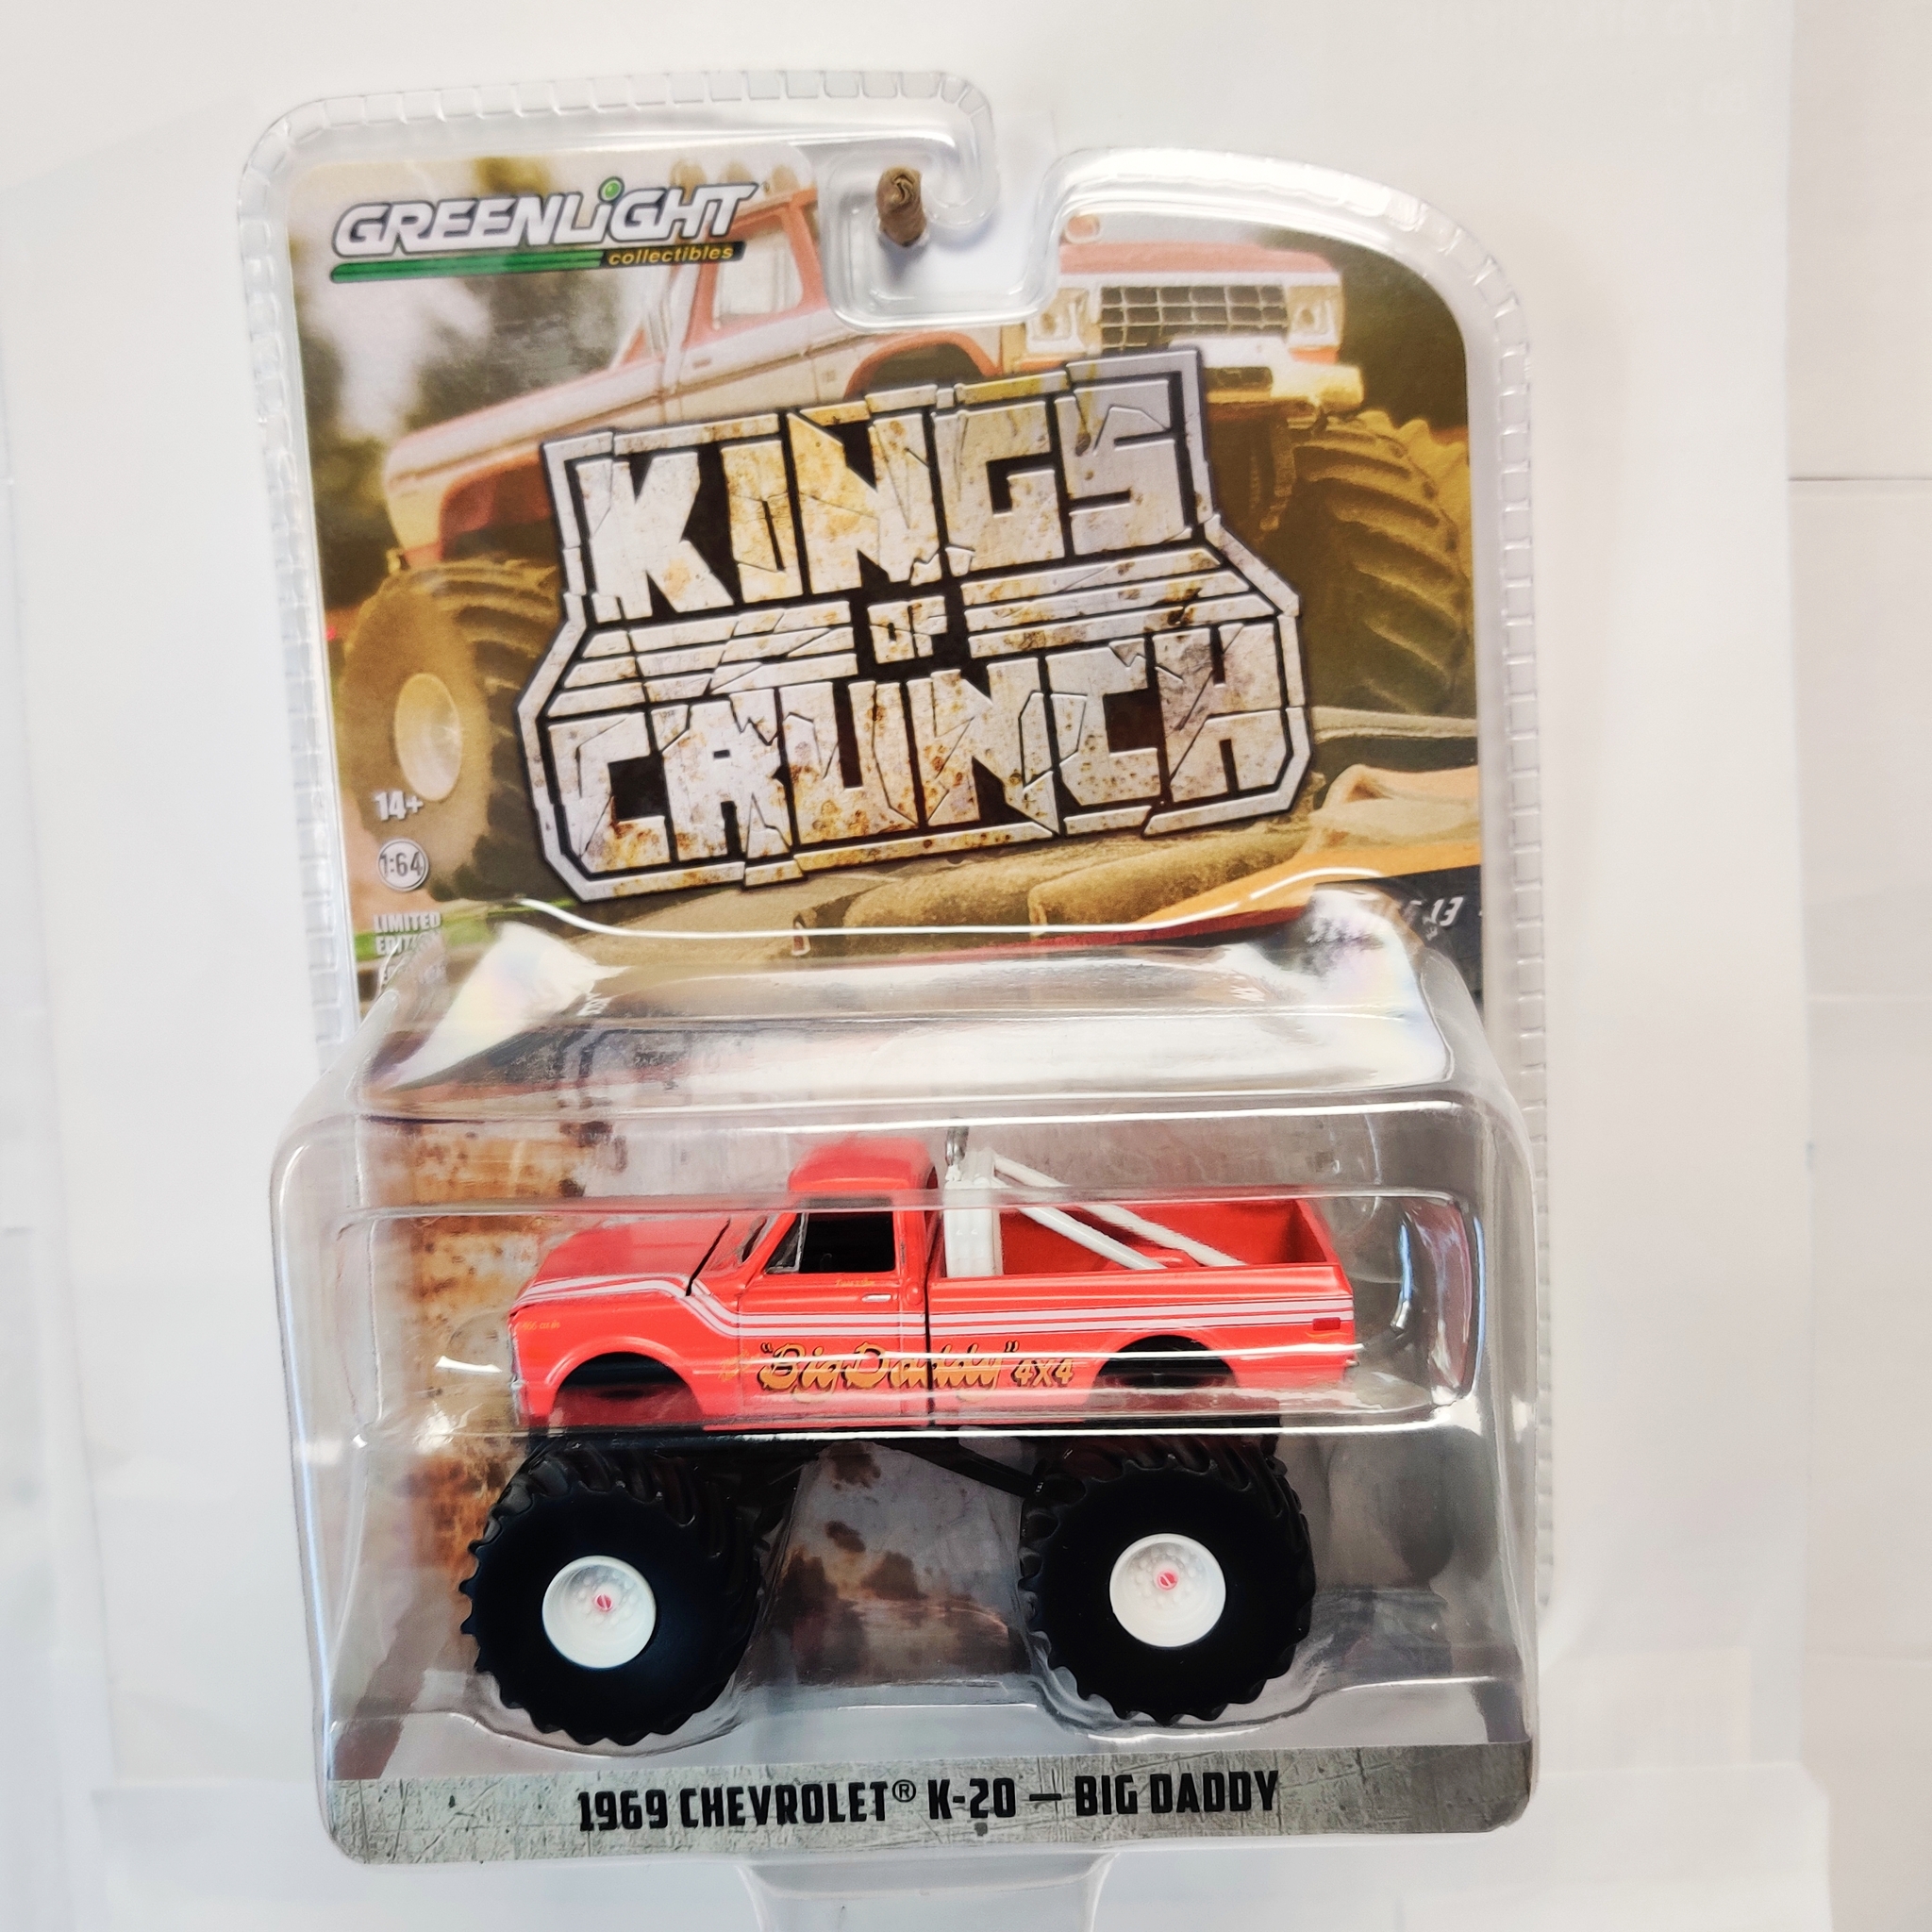 Skala 1/64 Greenlight "Kings of Crunch" 1985 Chevrolet K-20 - Big Daddy